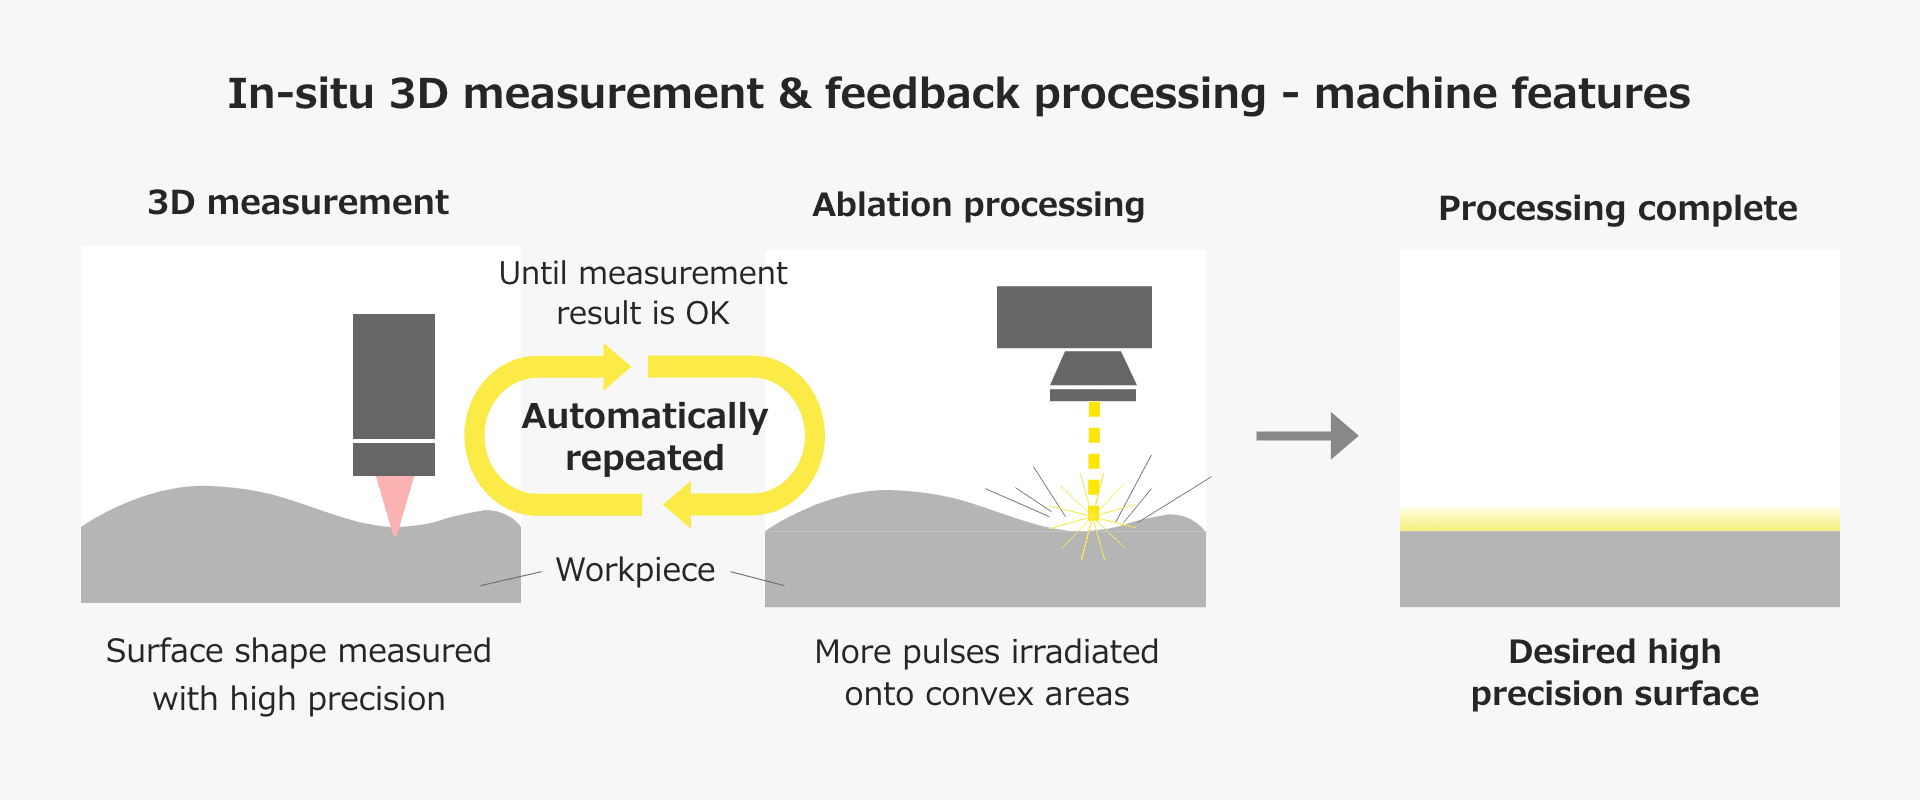 In-situ 3D measurement & feedback processing